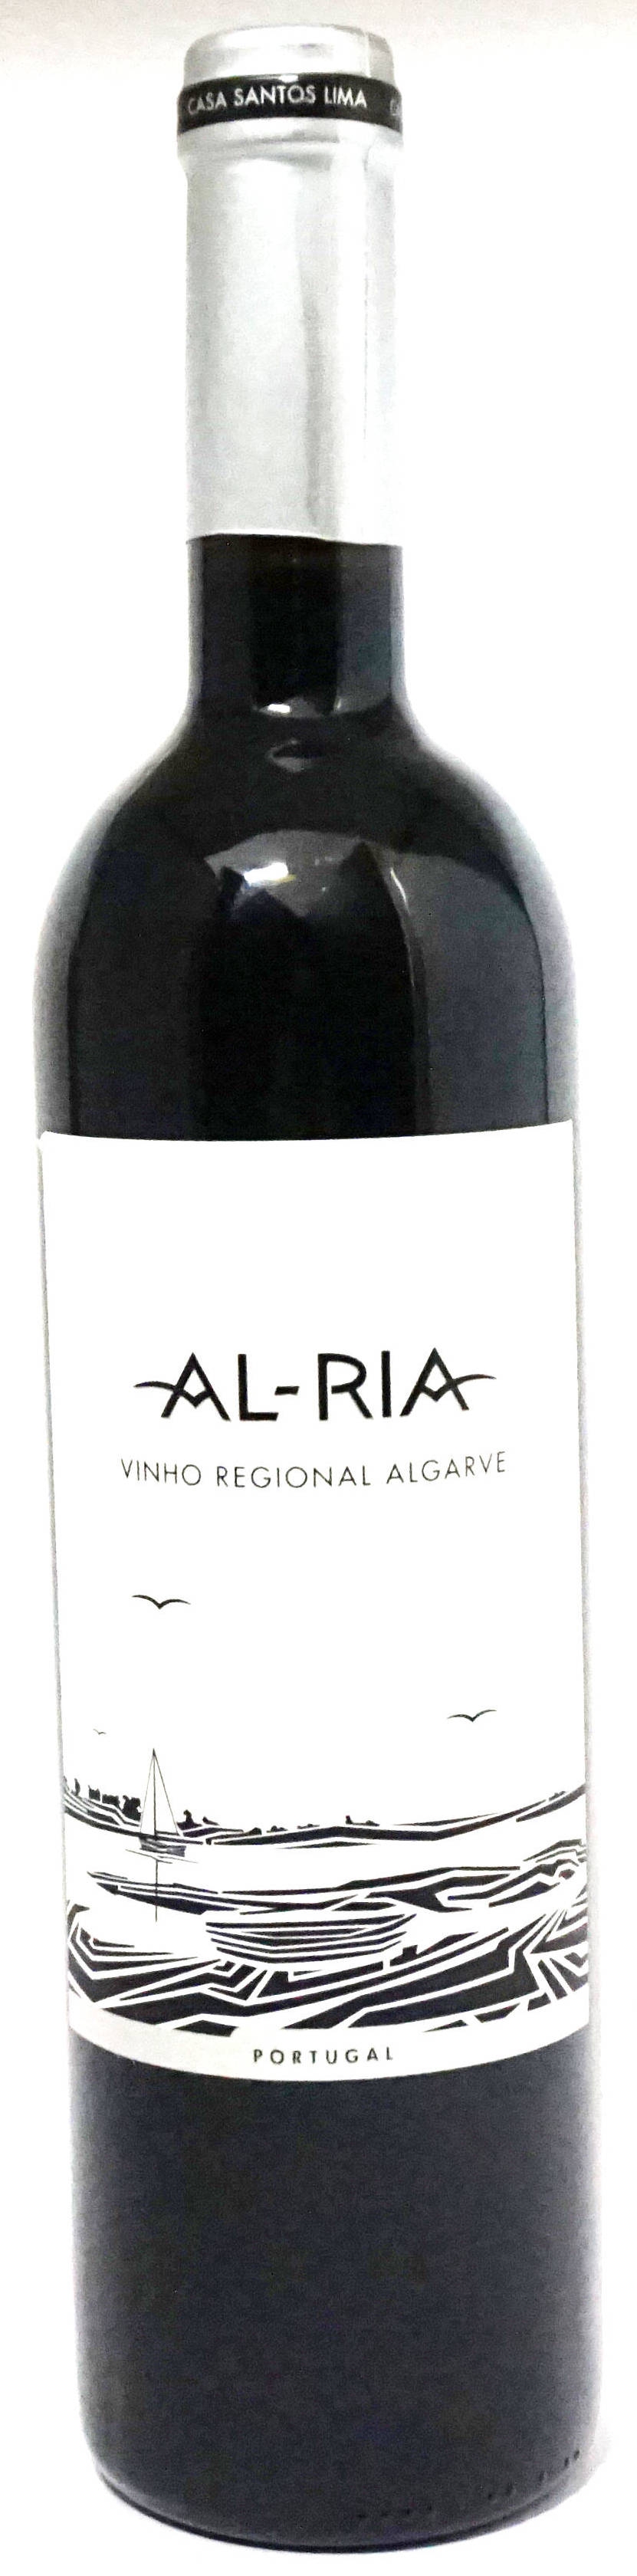 Al-Ria Vinho Regional